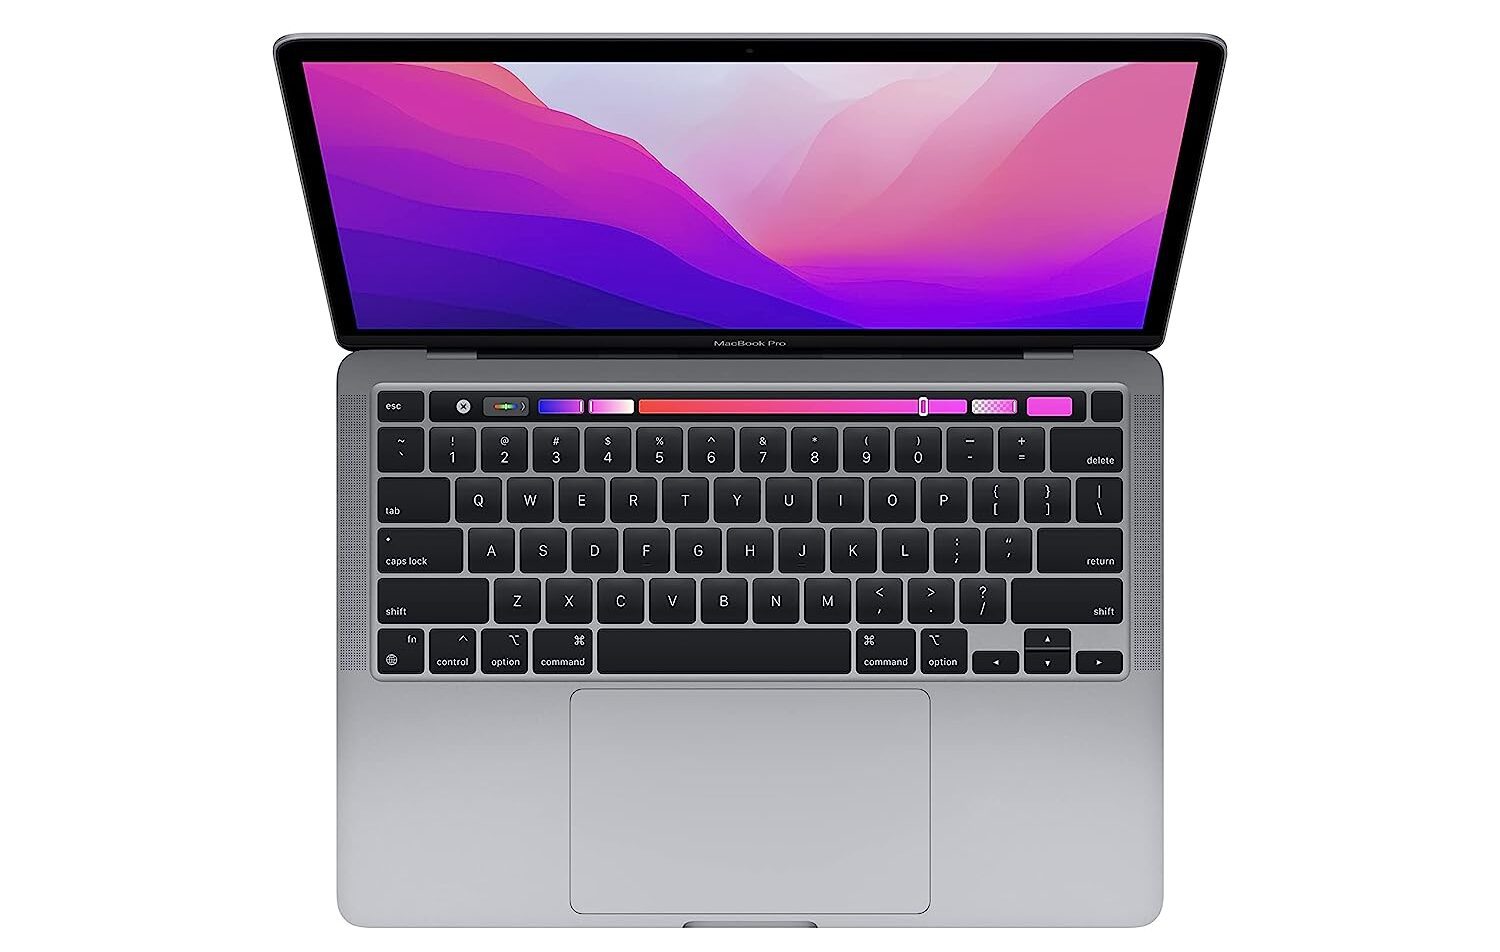 MacBook Pro 13” Review